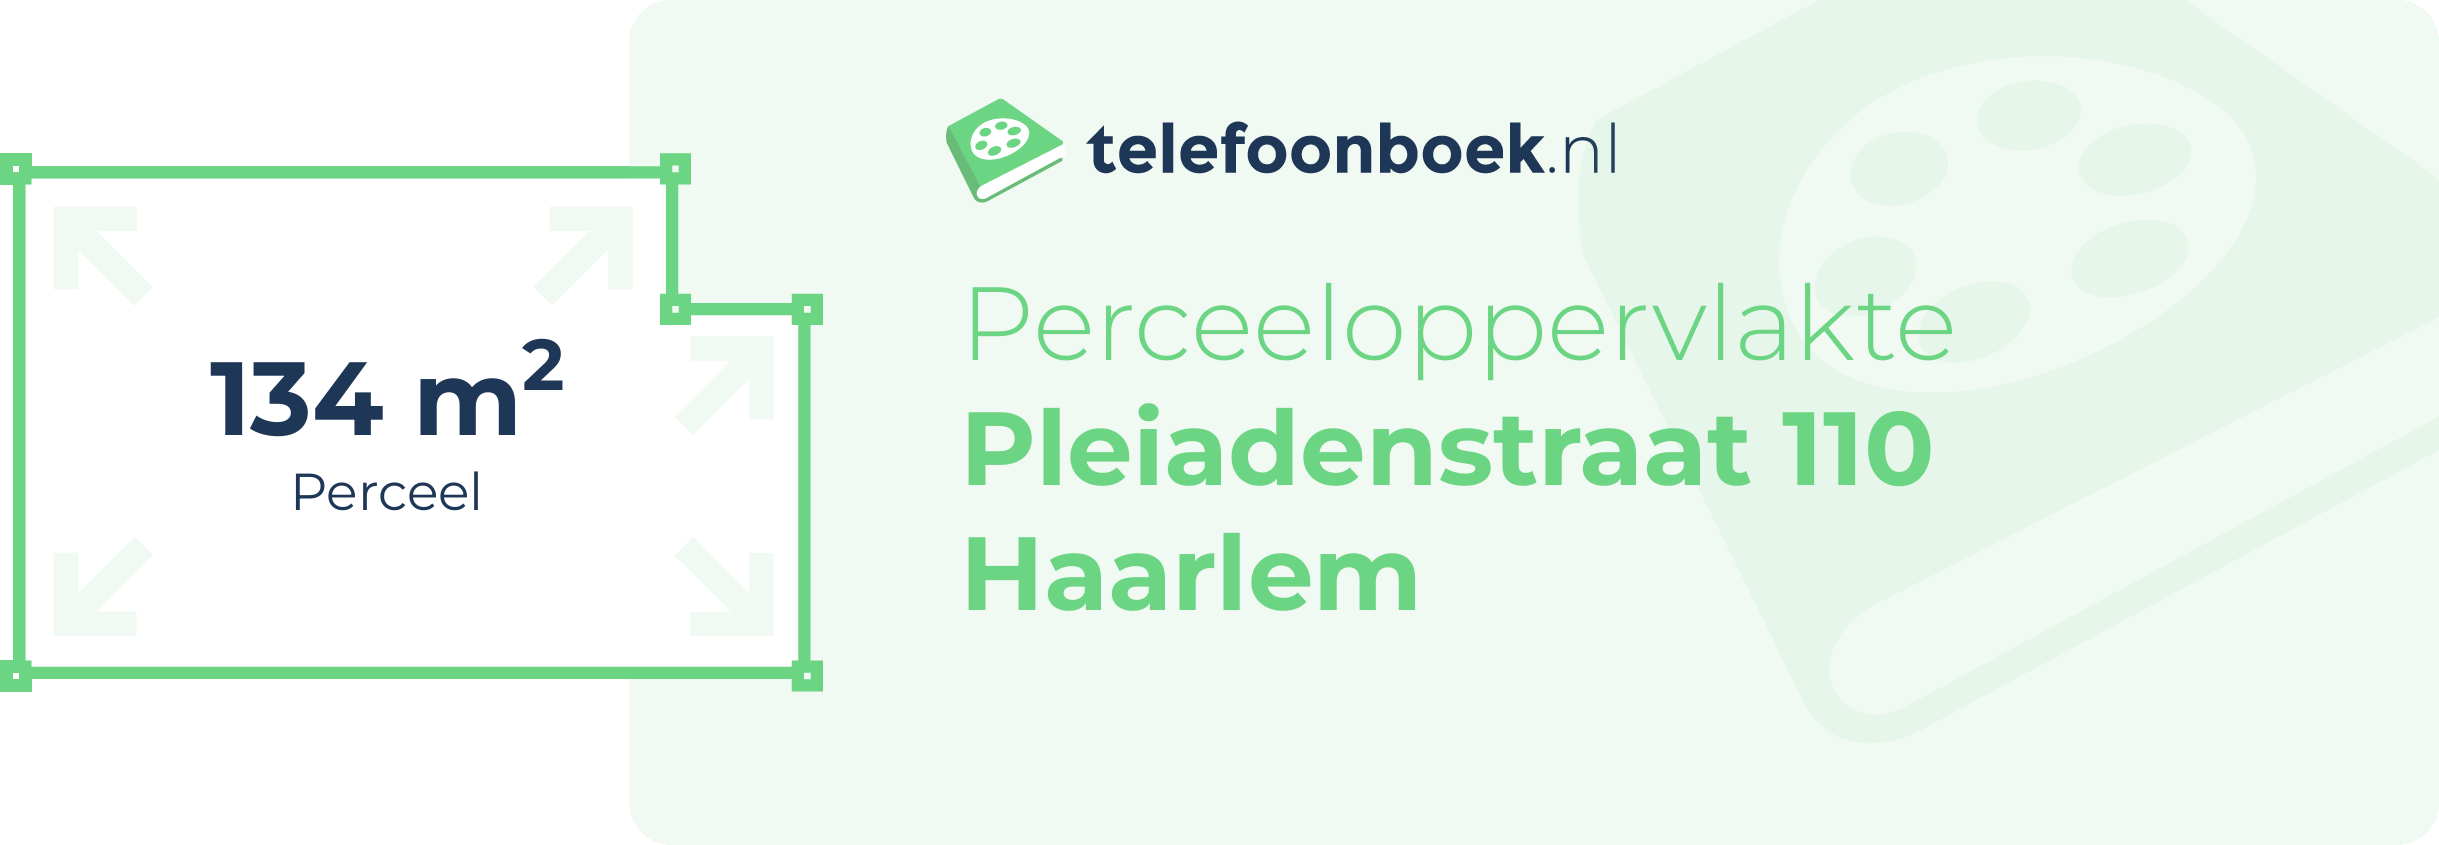 Perceeloppervlakte Pleiadenstraat 110 Haarlem